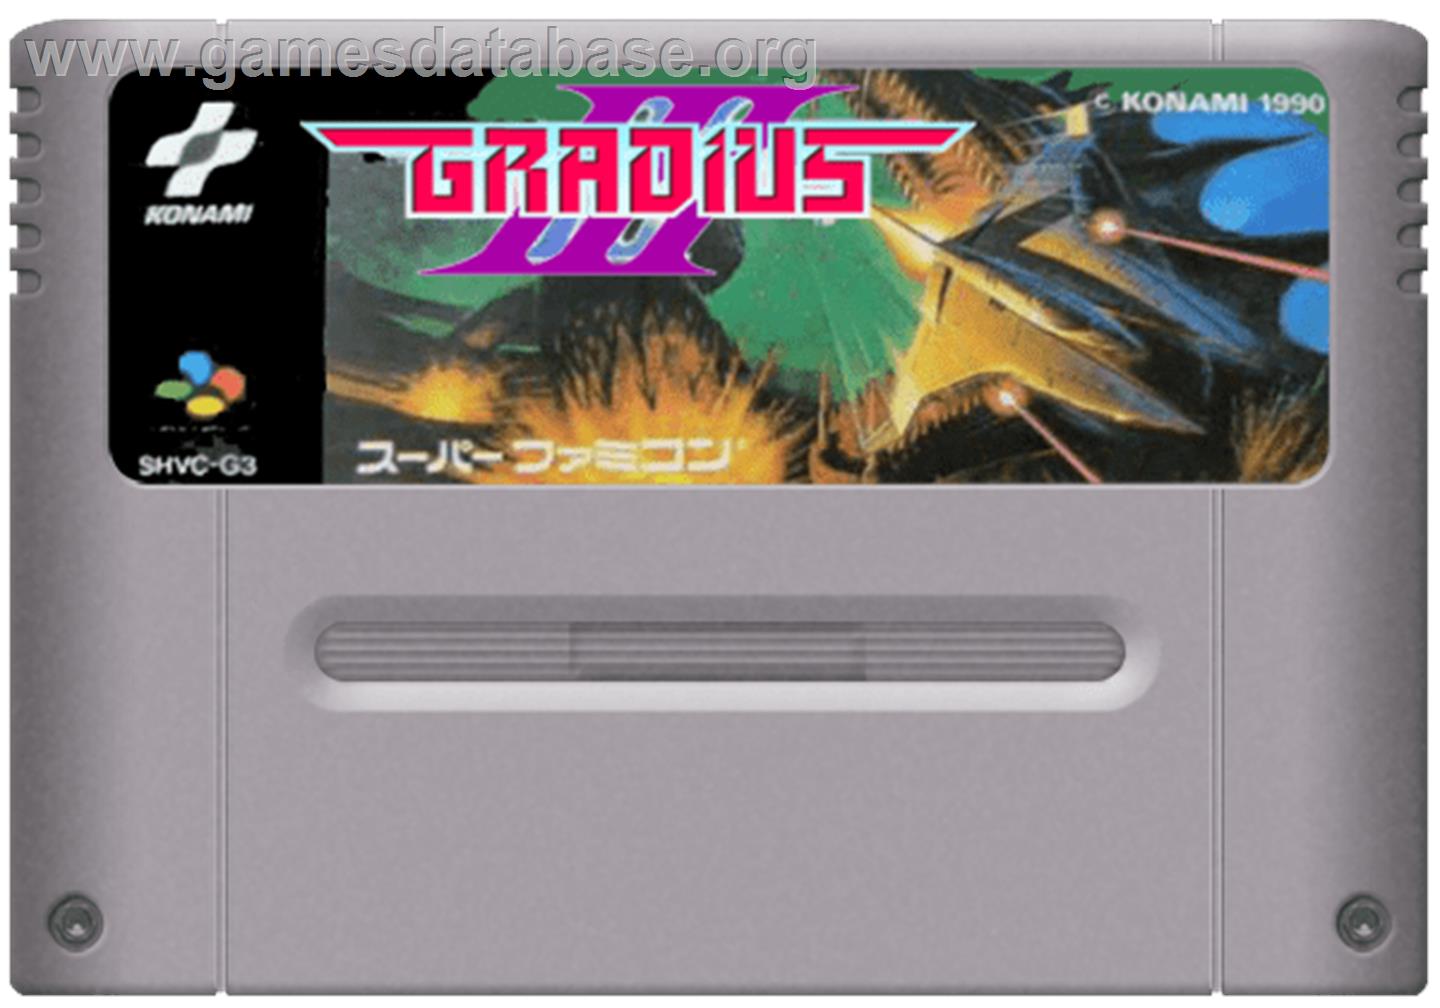 Gradius III - Nintendo SNES - Artwork - Cartridge